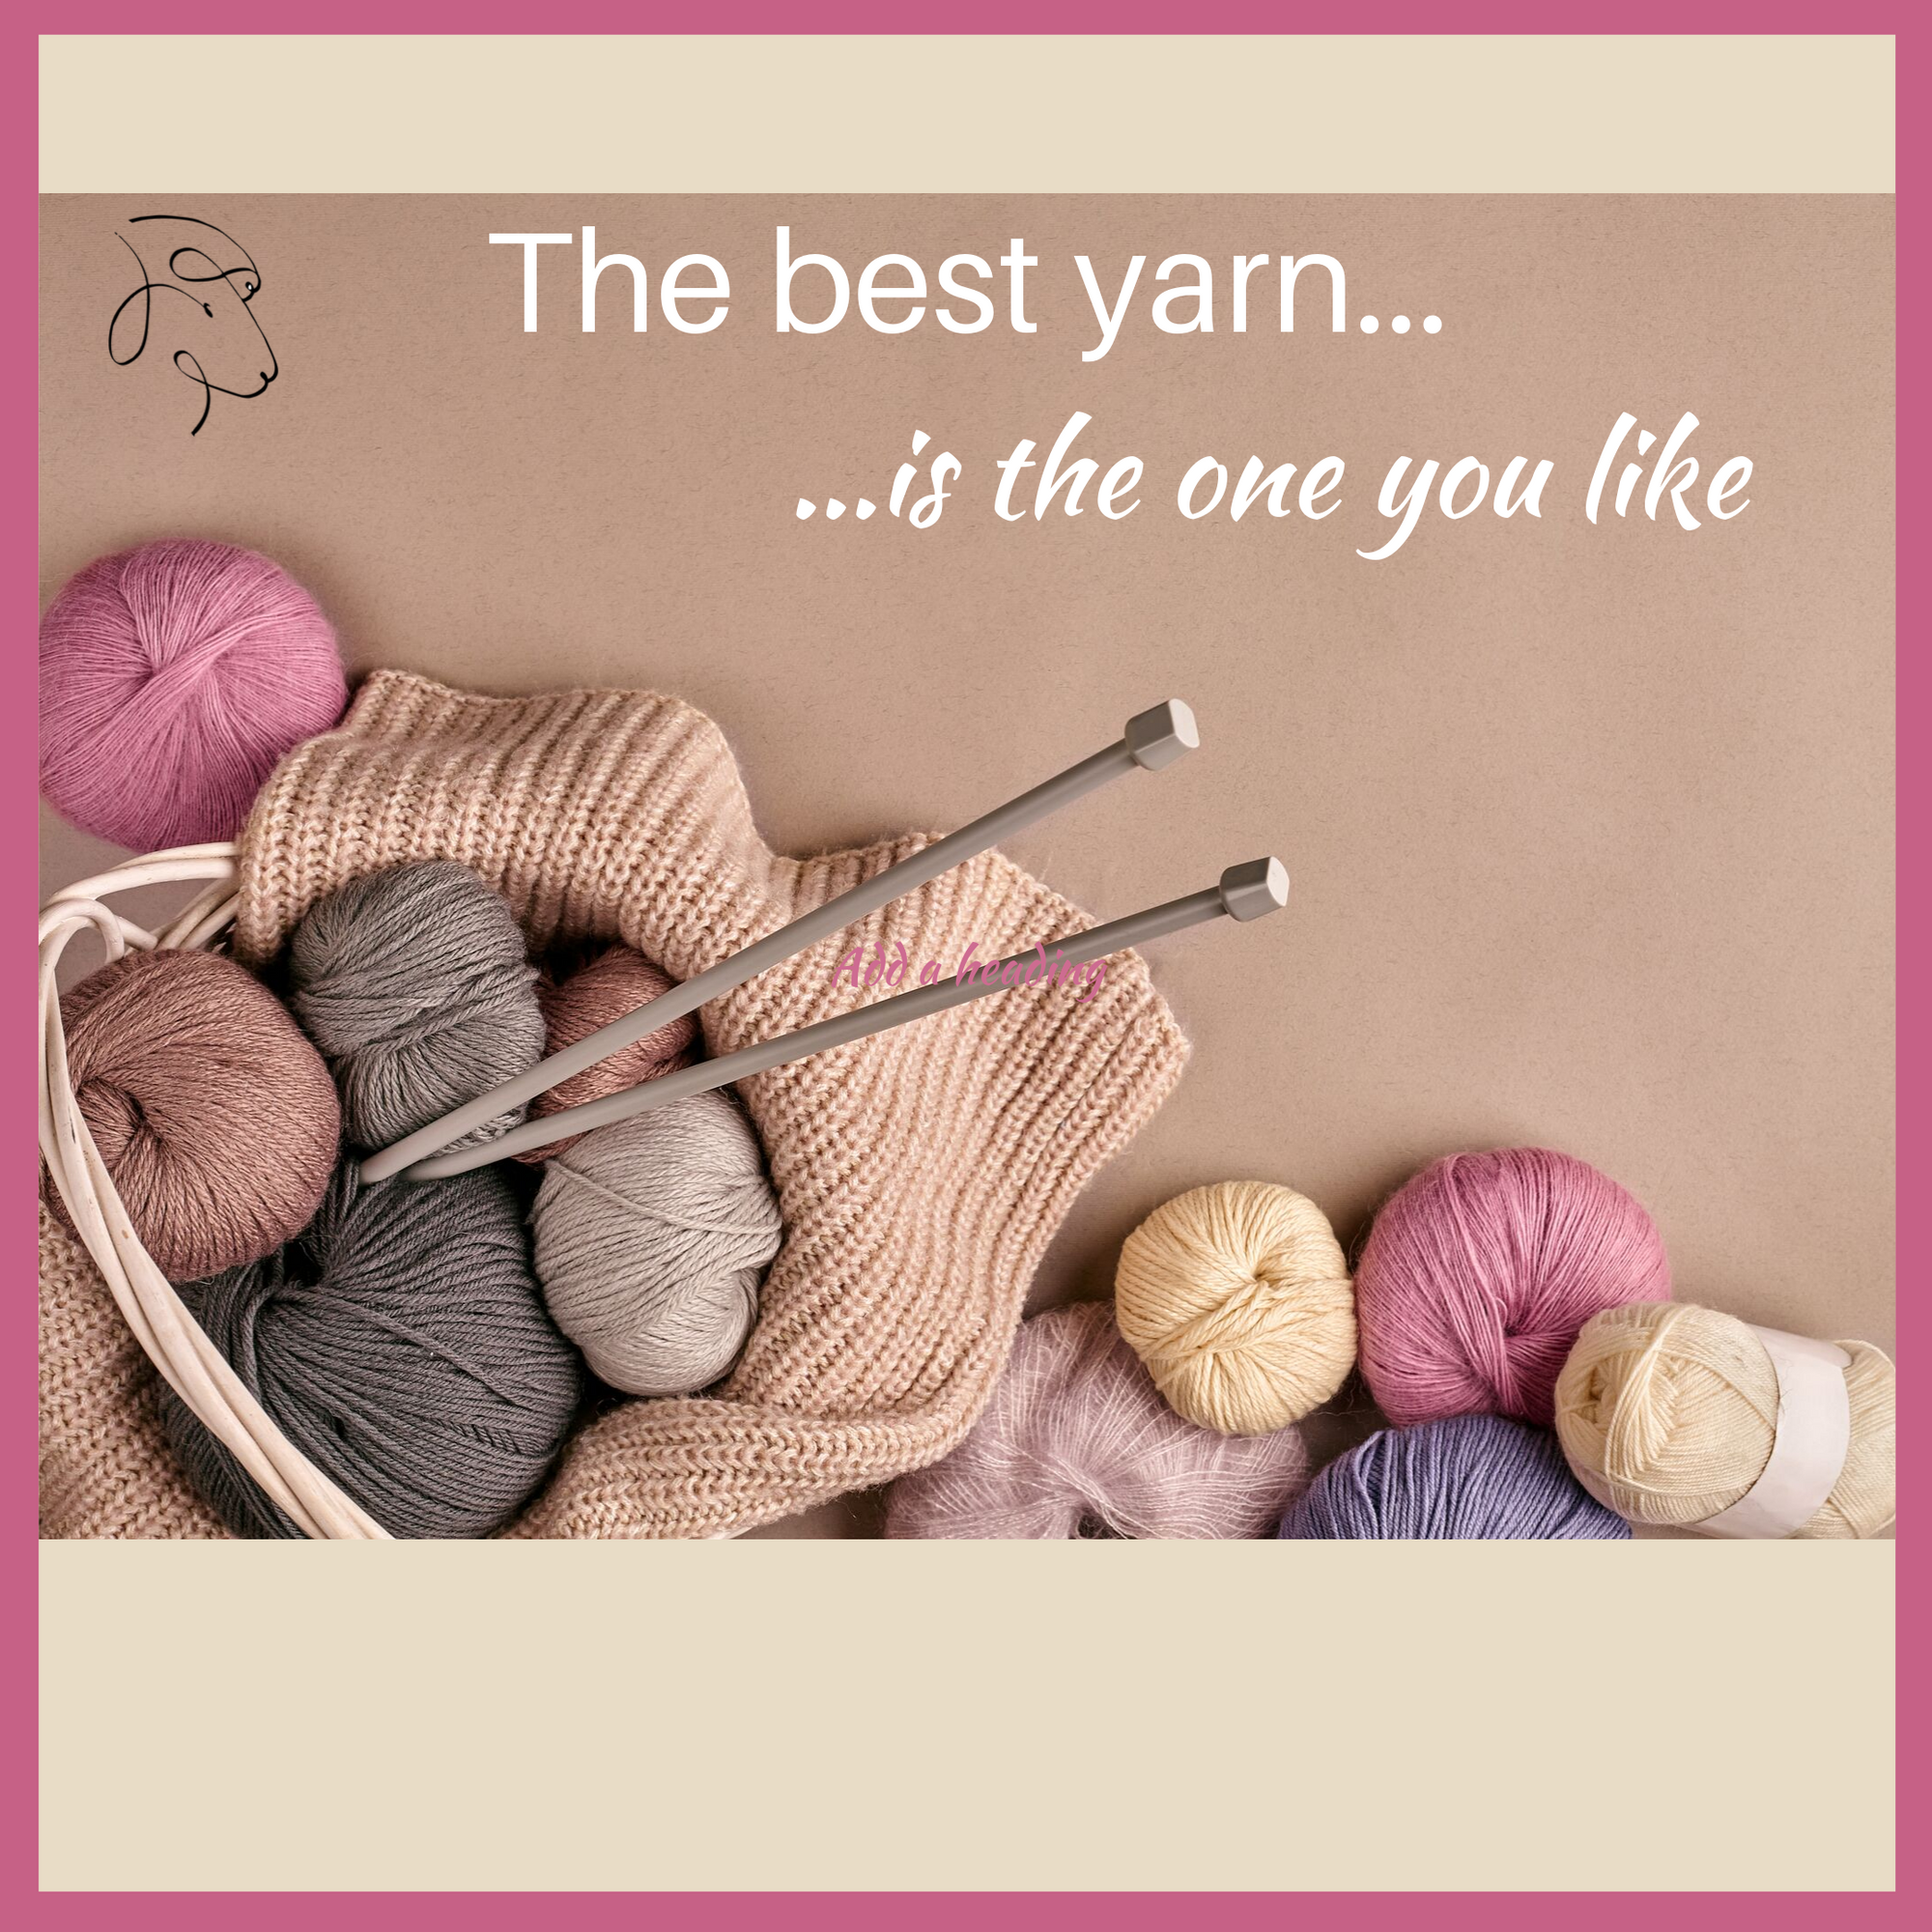 The best yarn